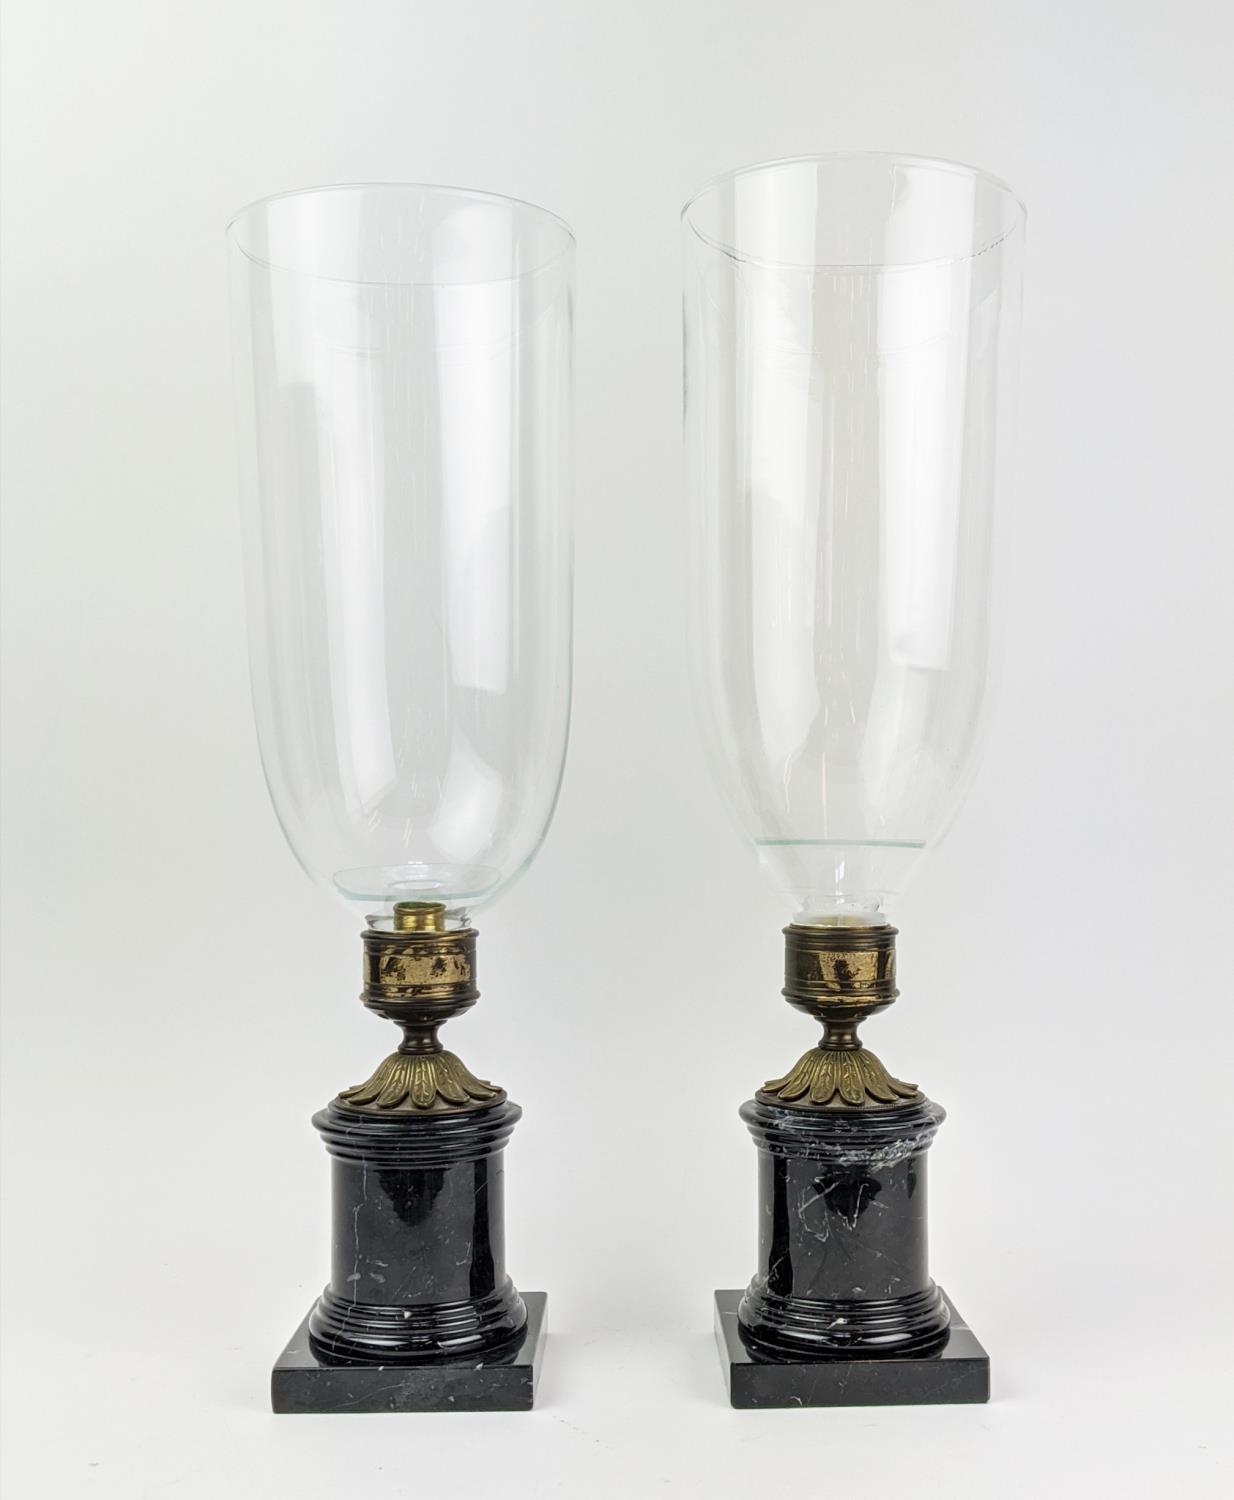 STORM LANTERNS, a pair, Regency design, 51cm H. (2)